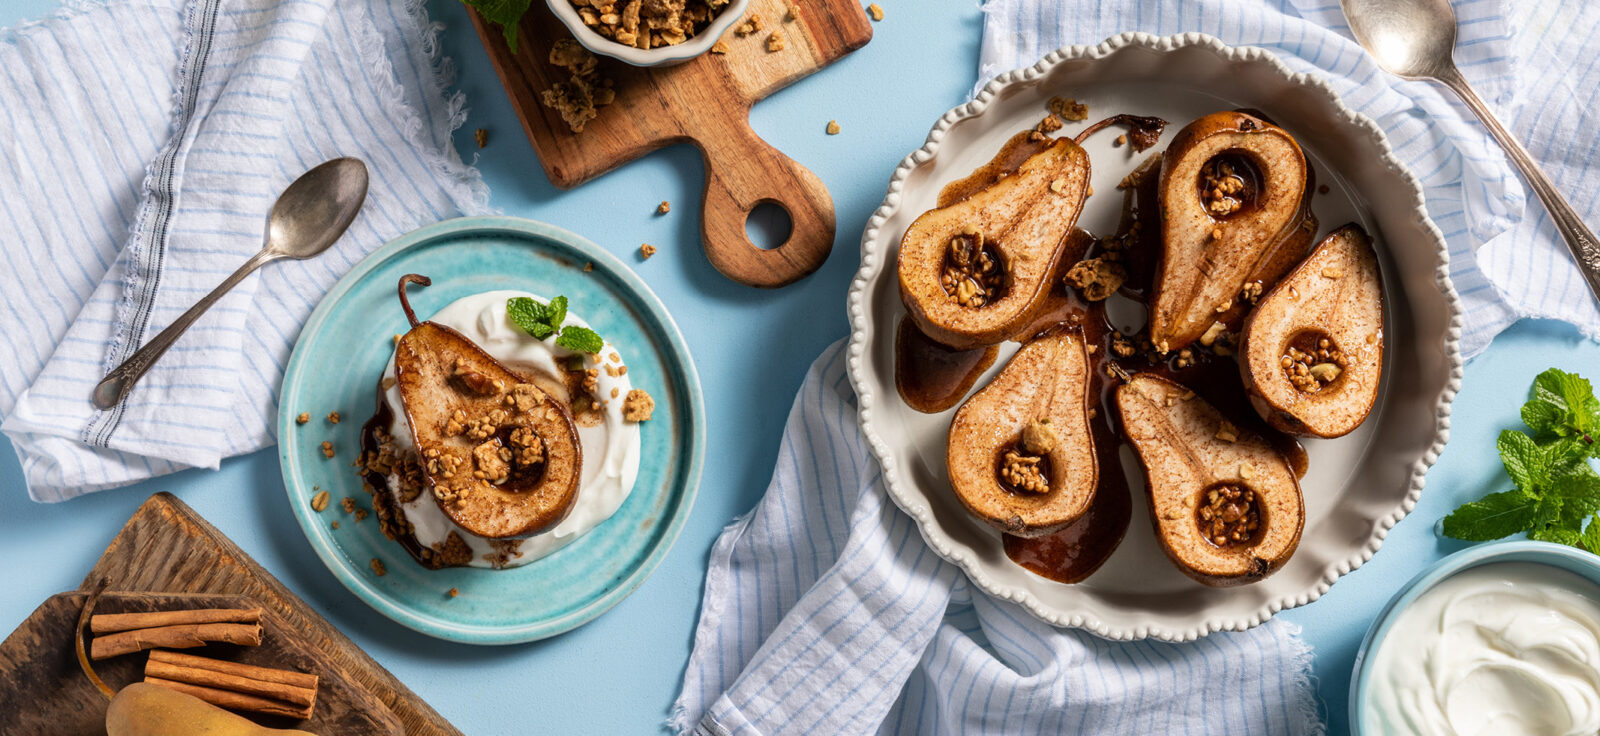 Honey and Cinnamon Baked Pears With Greek Yogurt